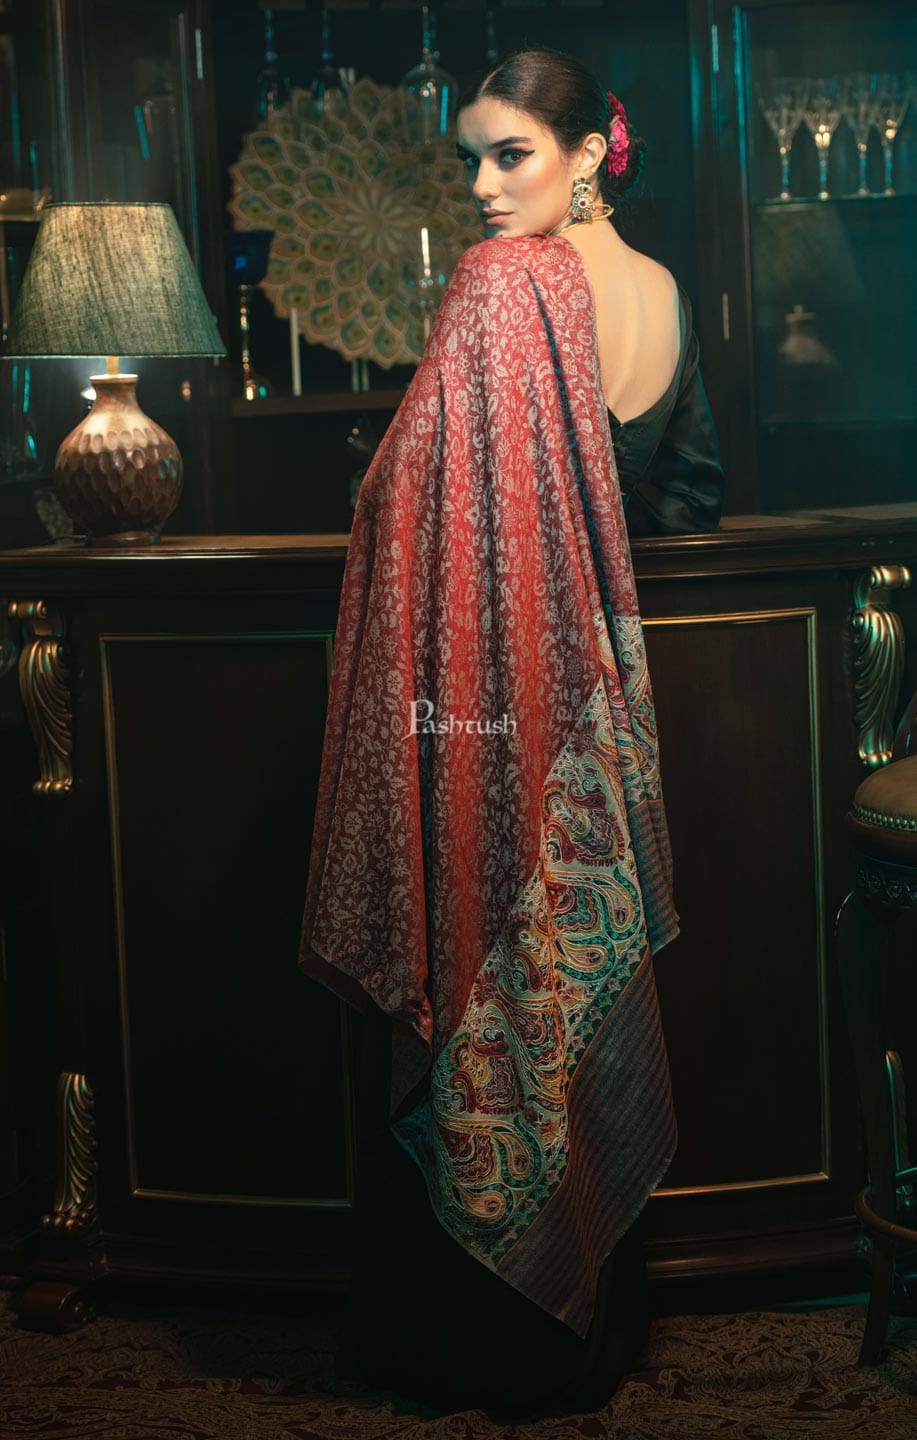 Pashtush India Womens Shawls Pashtush womens Fine Wool shawl, With Embroidered Ethnic Palla design, Soft and Warm